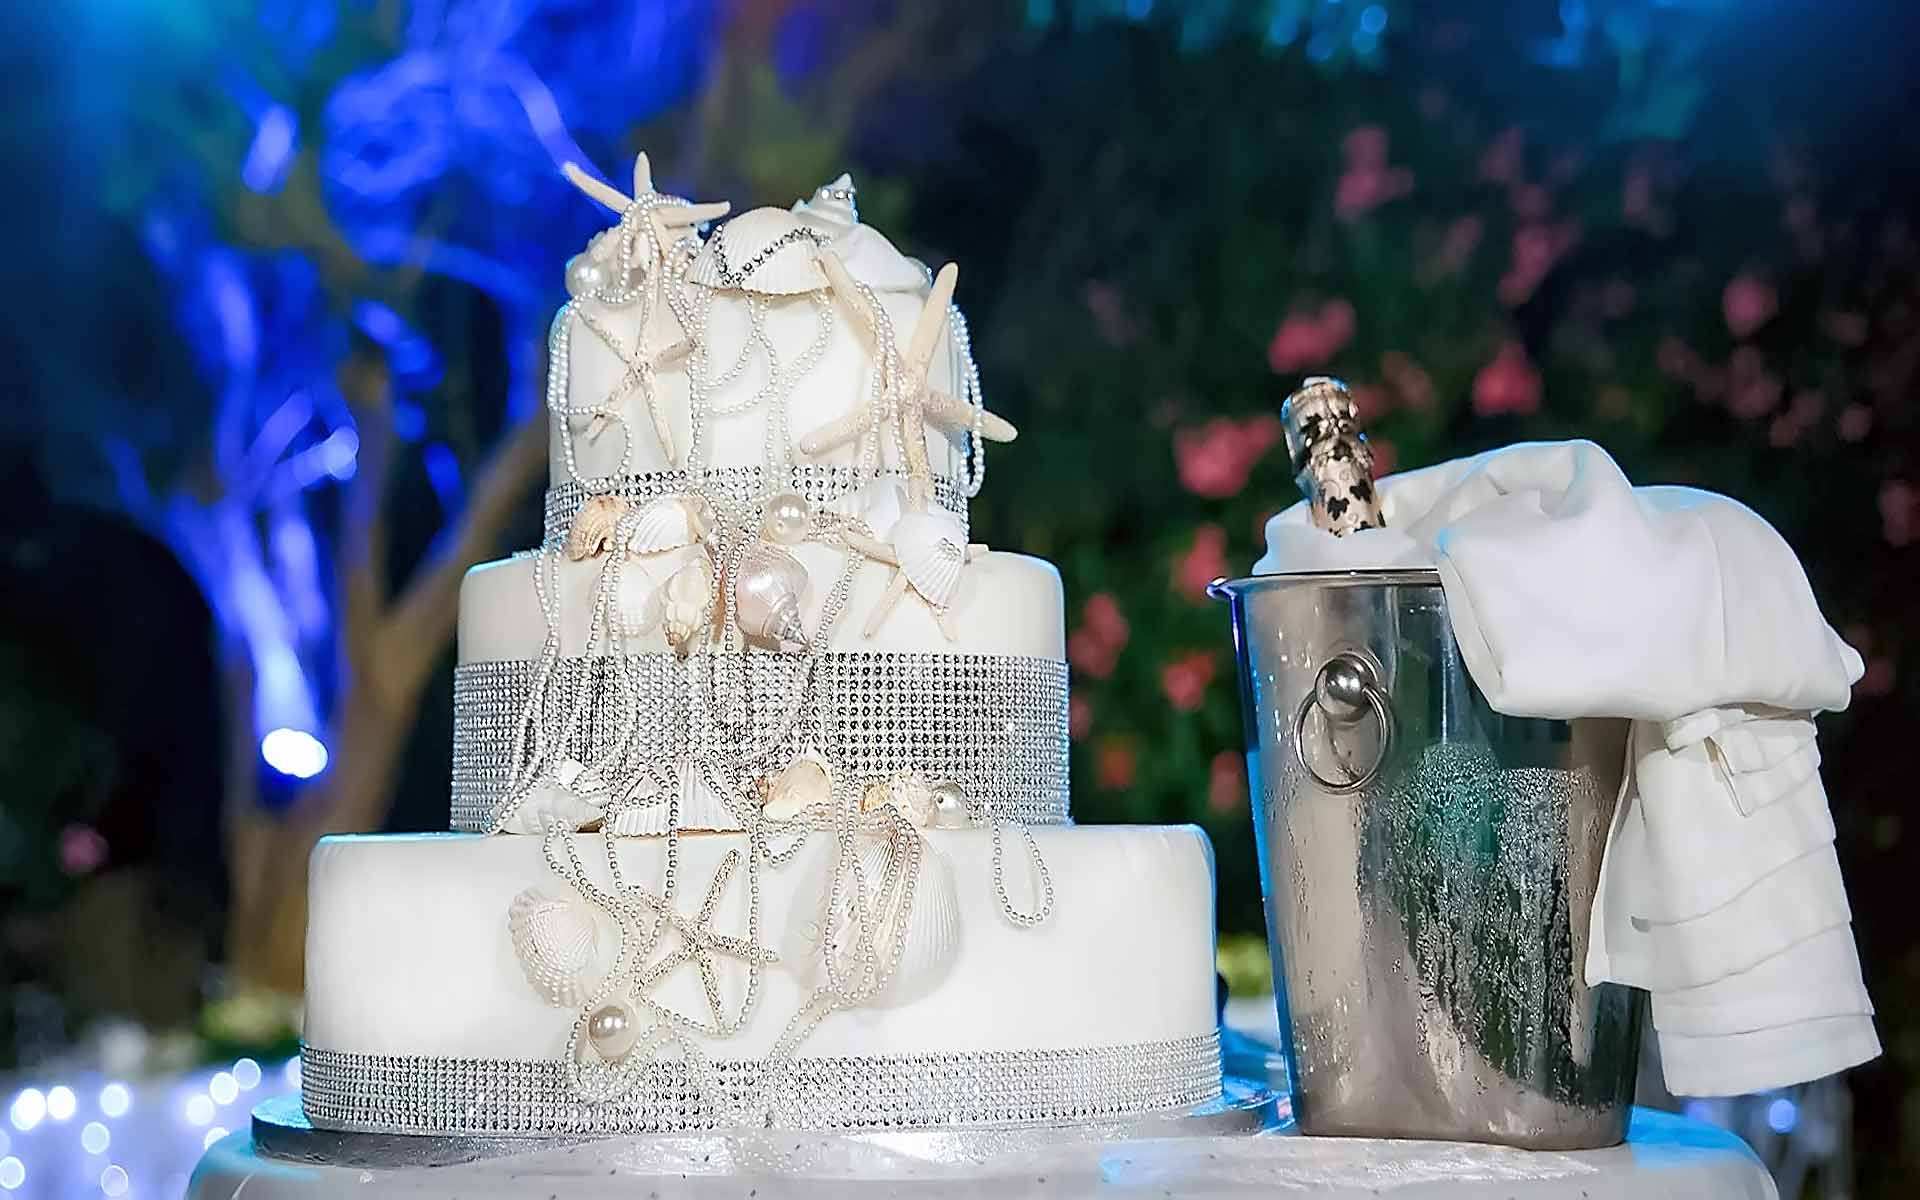 Crystals-Pearls-And-Metallic-Seashells-Drape-This-Chic-Nautical-Wedding-Cake